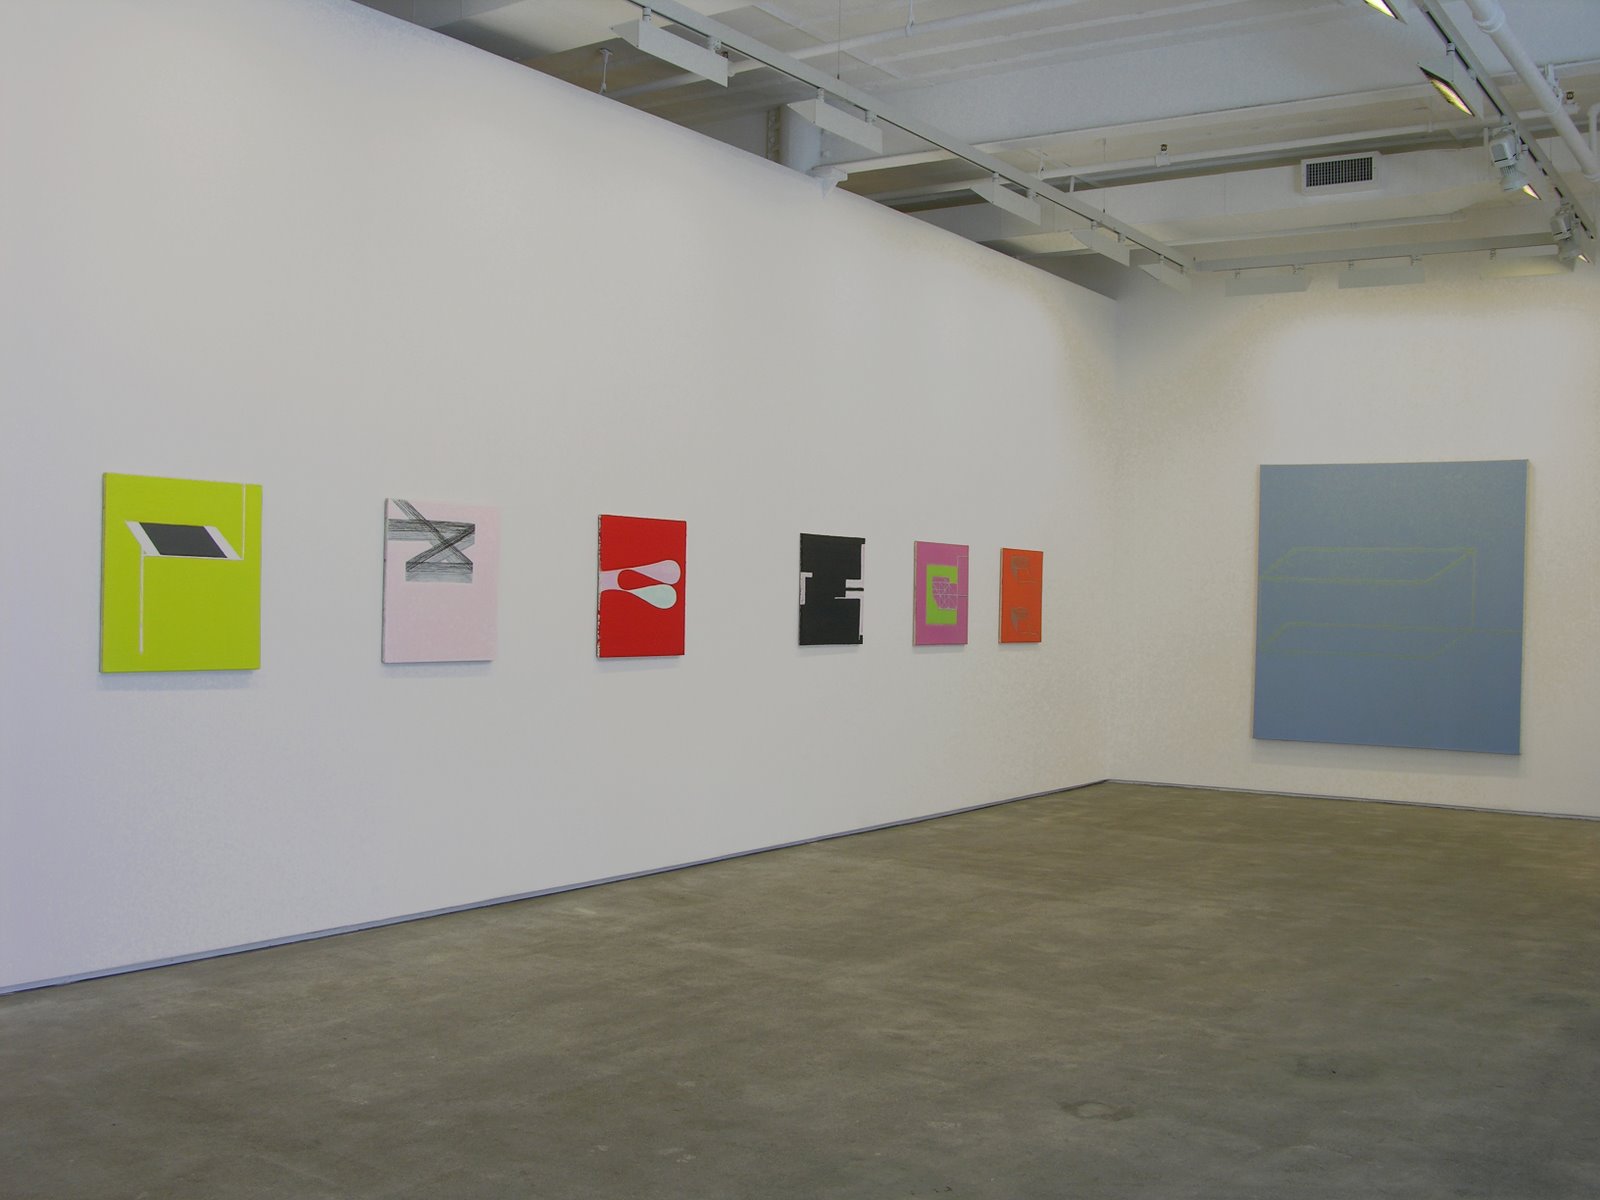  Moti Hasson Gallery, NY: Solo show, 2007